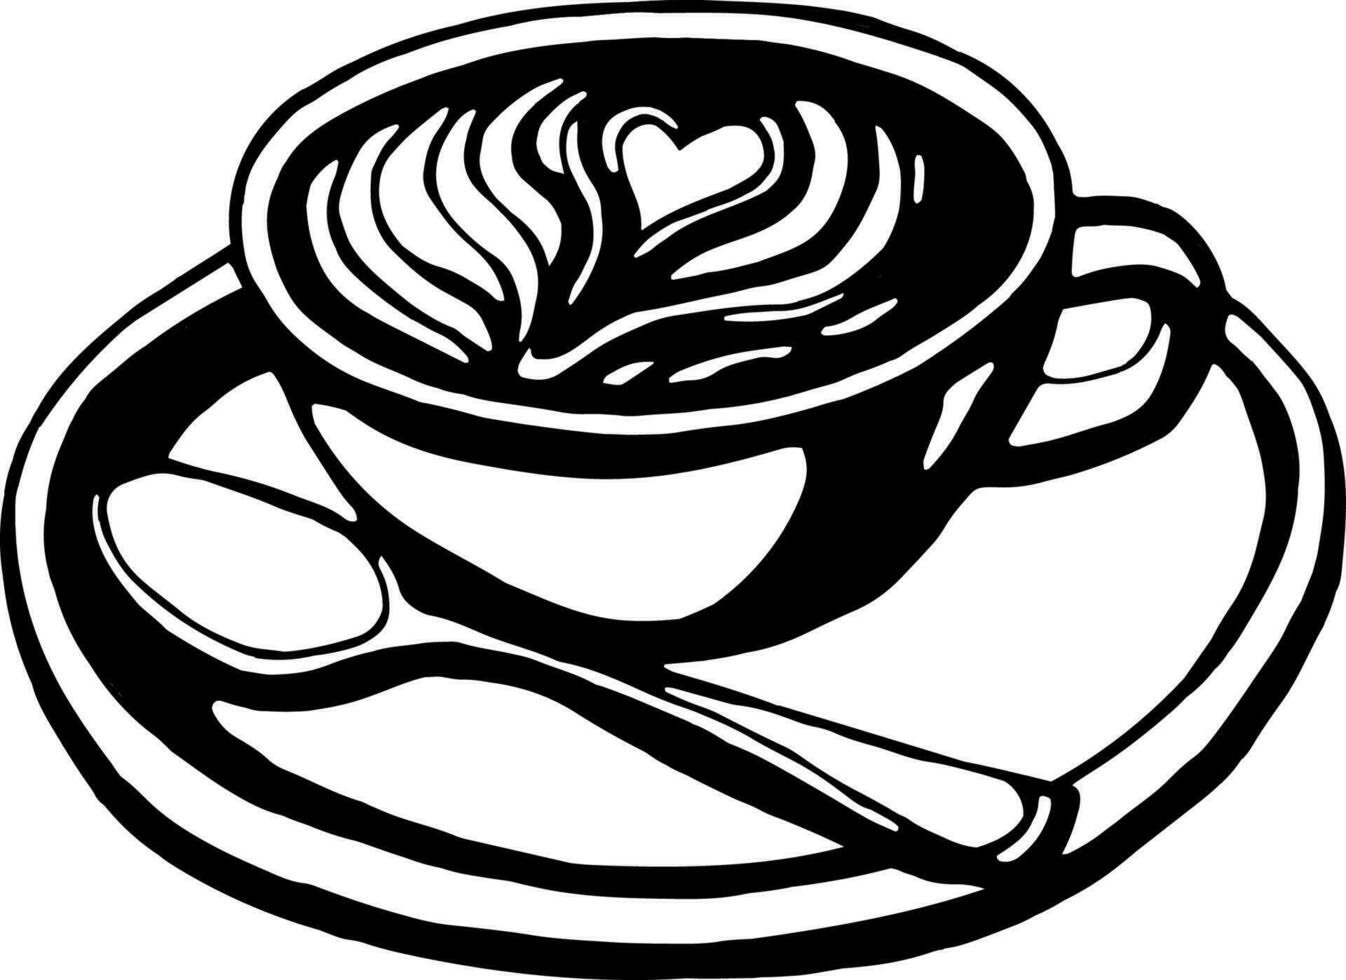 taza de café con espuma me gusta un corazón en un plato con un cuchara vector